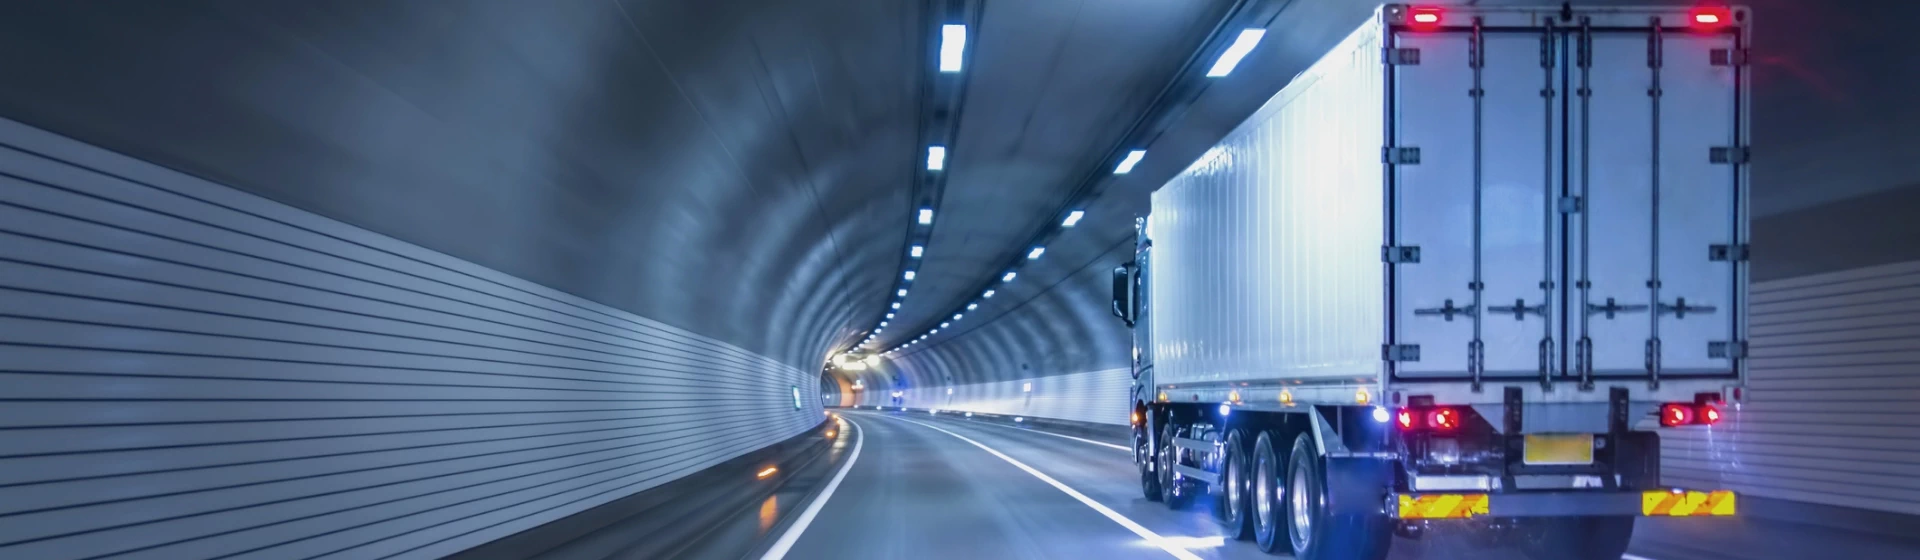 Ciężarówka jadąca tunelem